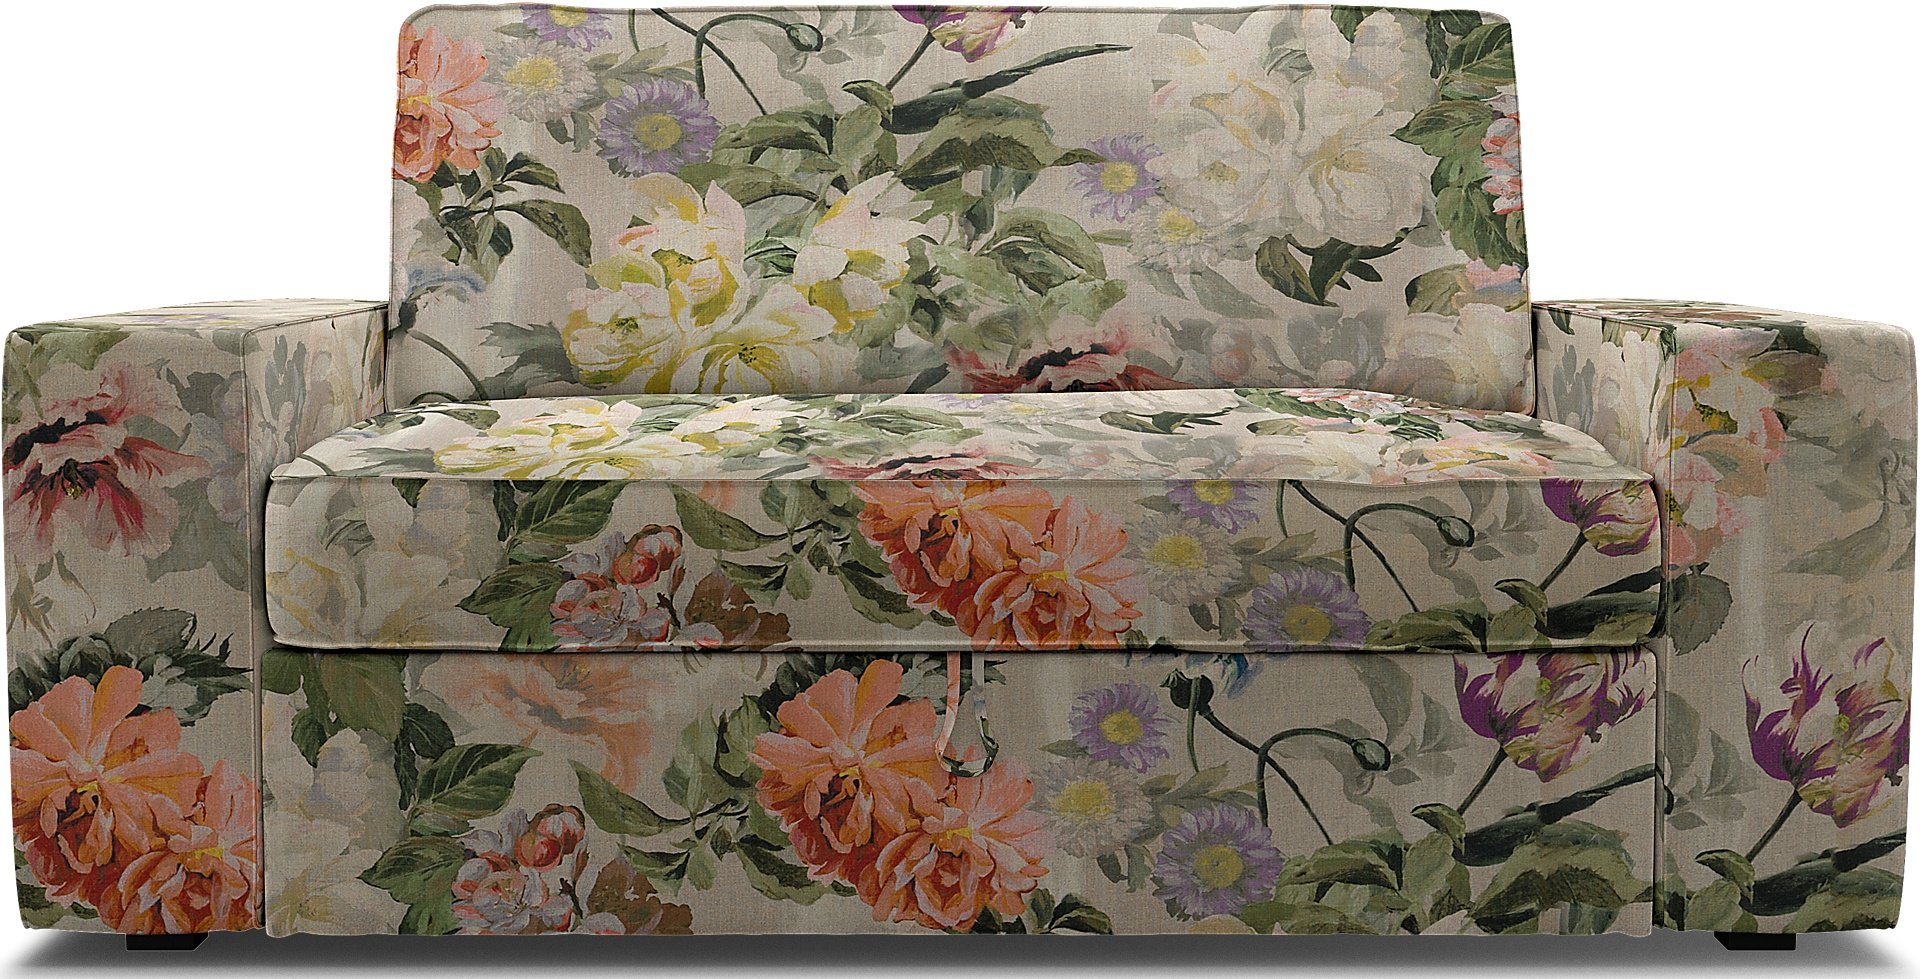 IKEA - Vilasund 2 seater sofa bed cover, Delft Flower - Tuberose, Linen - Bemz